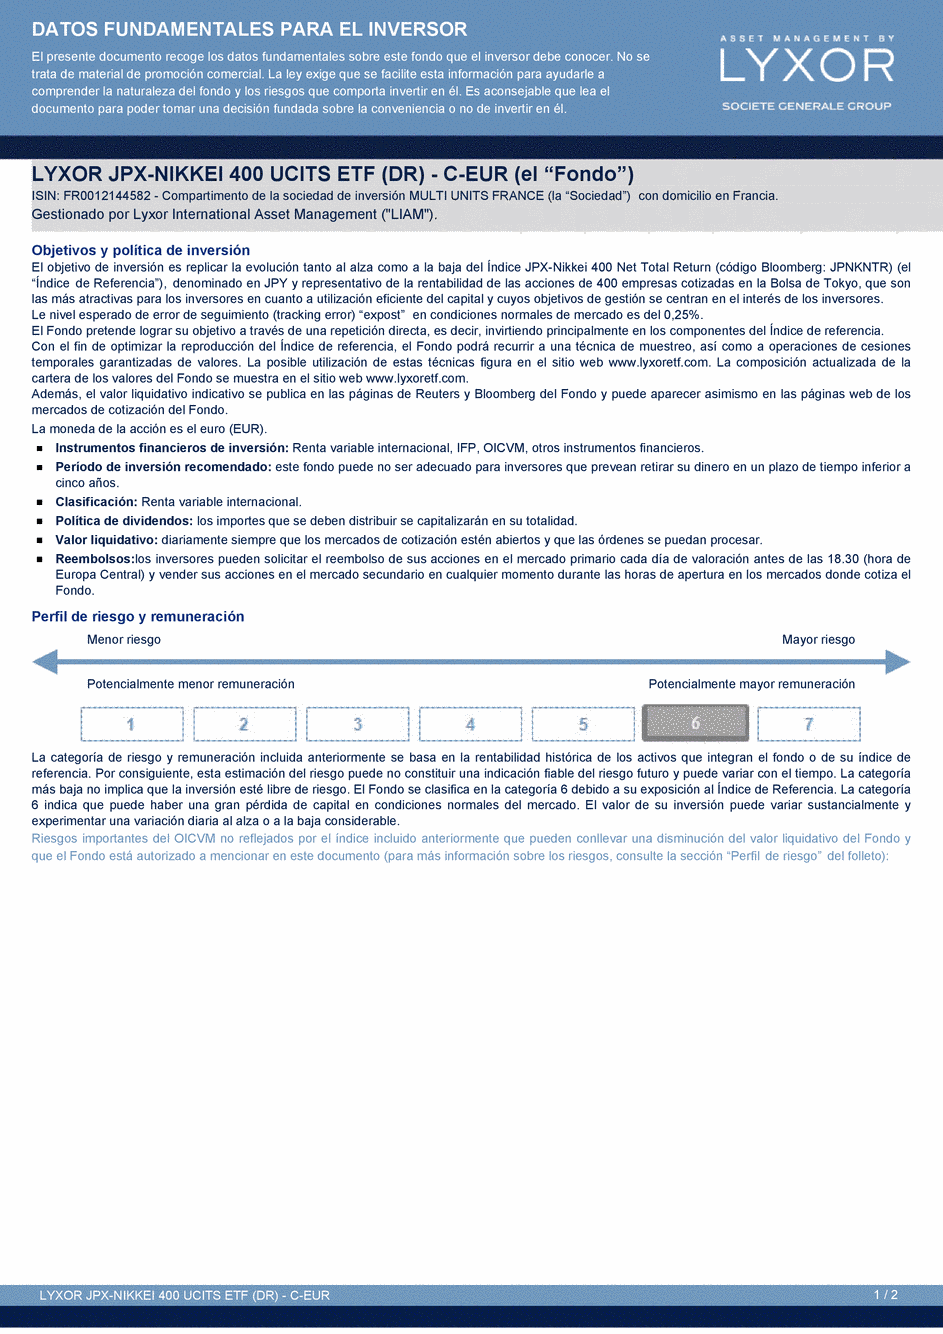 DICI LYXOR JPX-NIKKEI 400 UCITS ETF (DR) C-EUR - 20/08/2015 - Espagnol